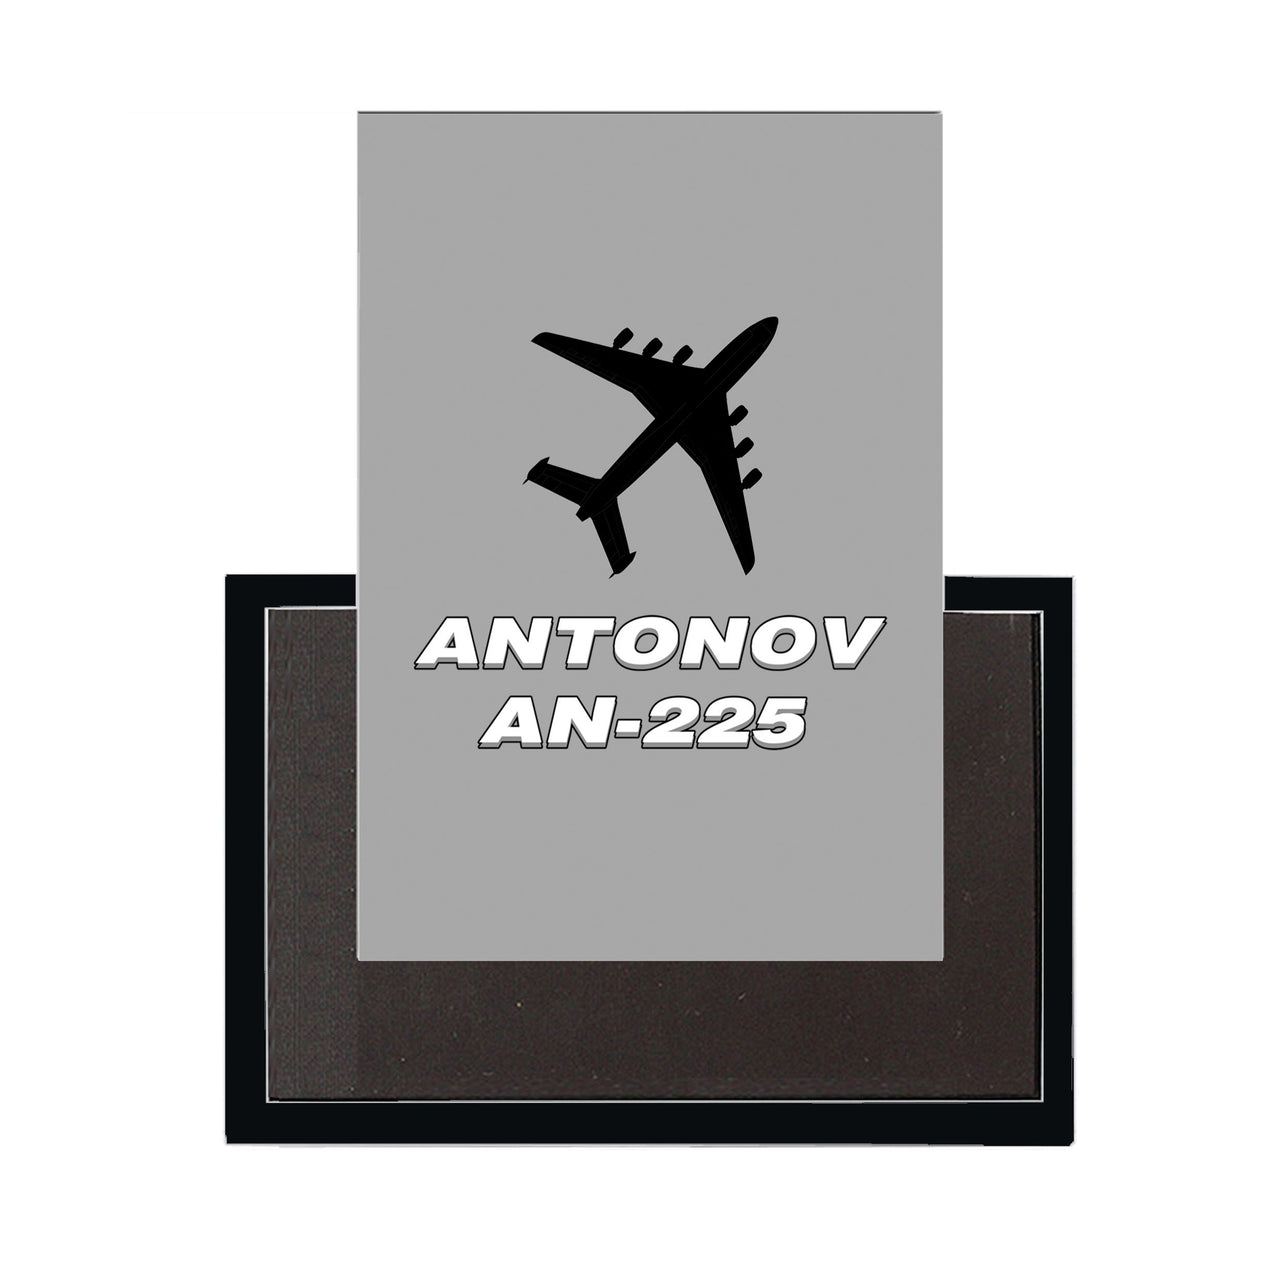 Antonov AN-225 (28) Designed Magnets